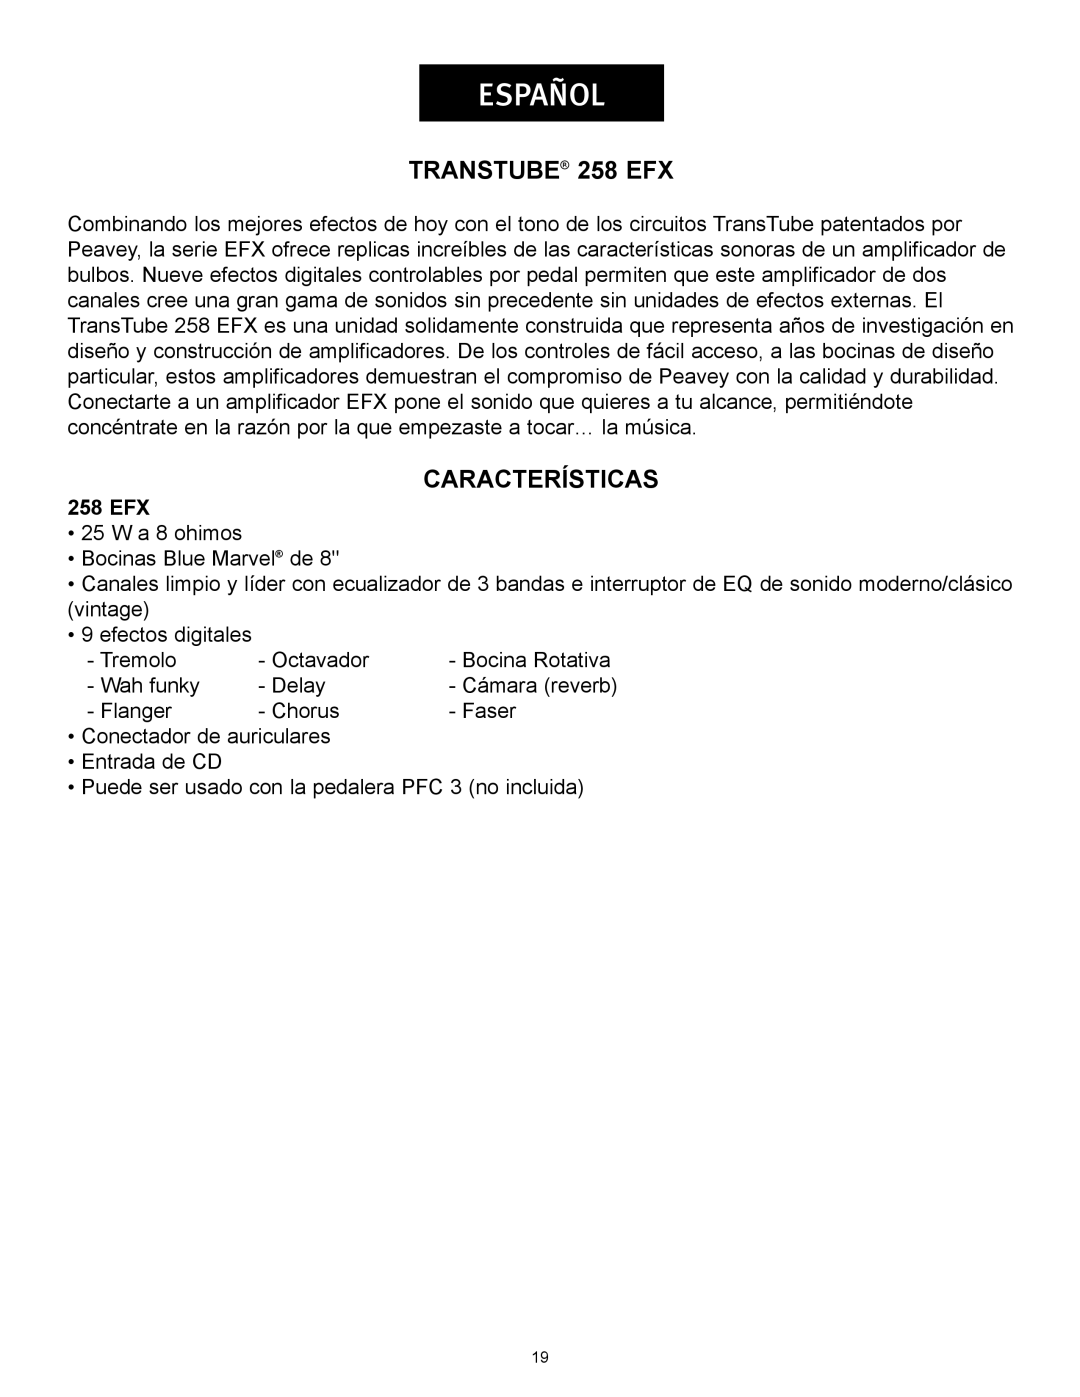 Peavey operation manual Español, Características, TRANSTUBE 258 EFX 